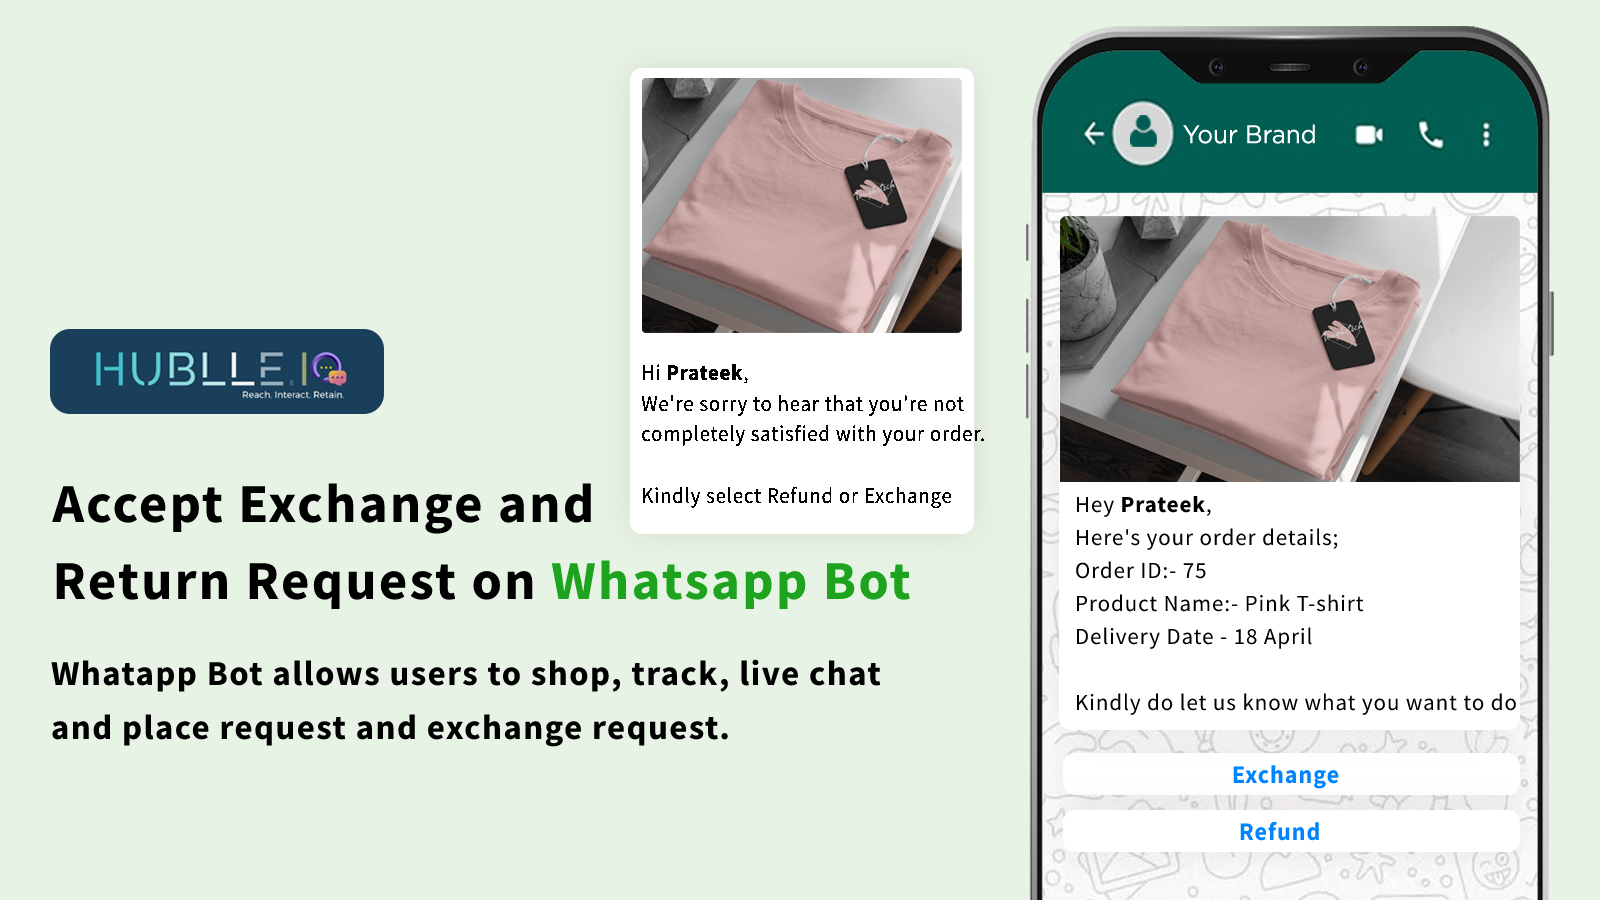 Accepter udveksling og returanmodning på Whatsapp Bot